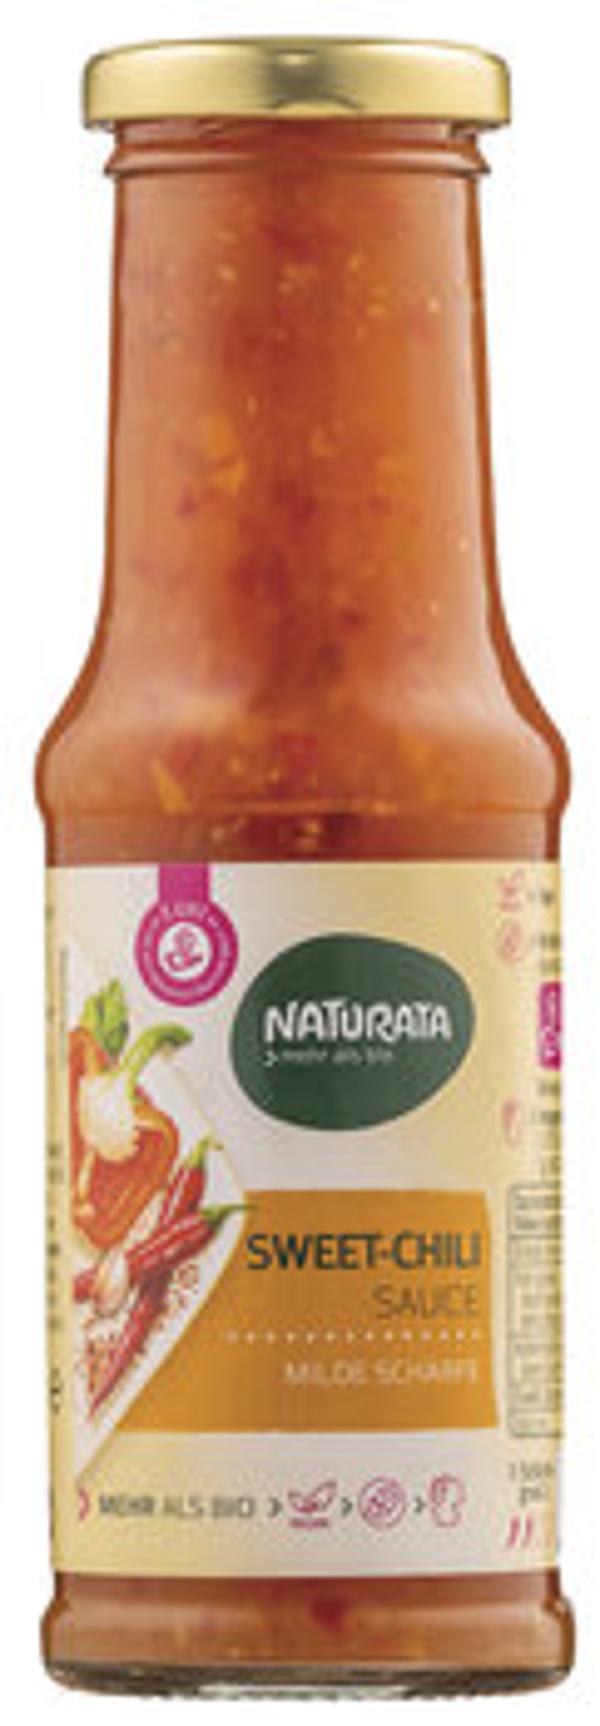 Produktfoto zu Naturata Sweet Chili Sauce - 210ml